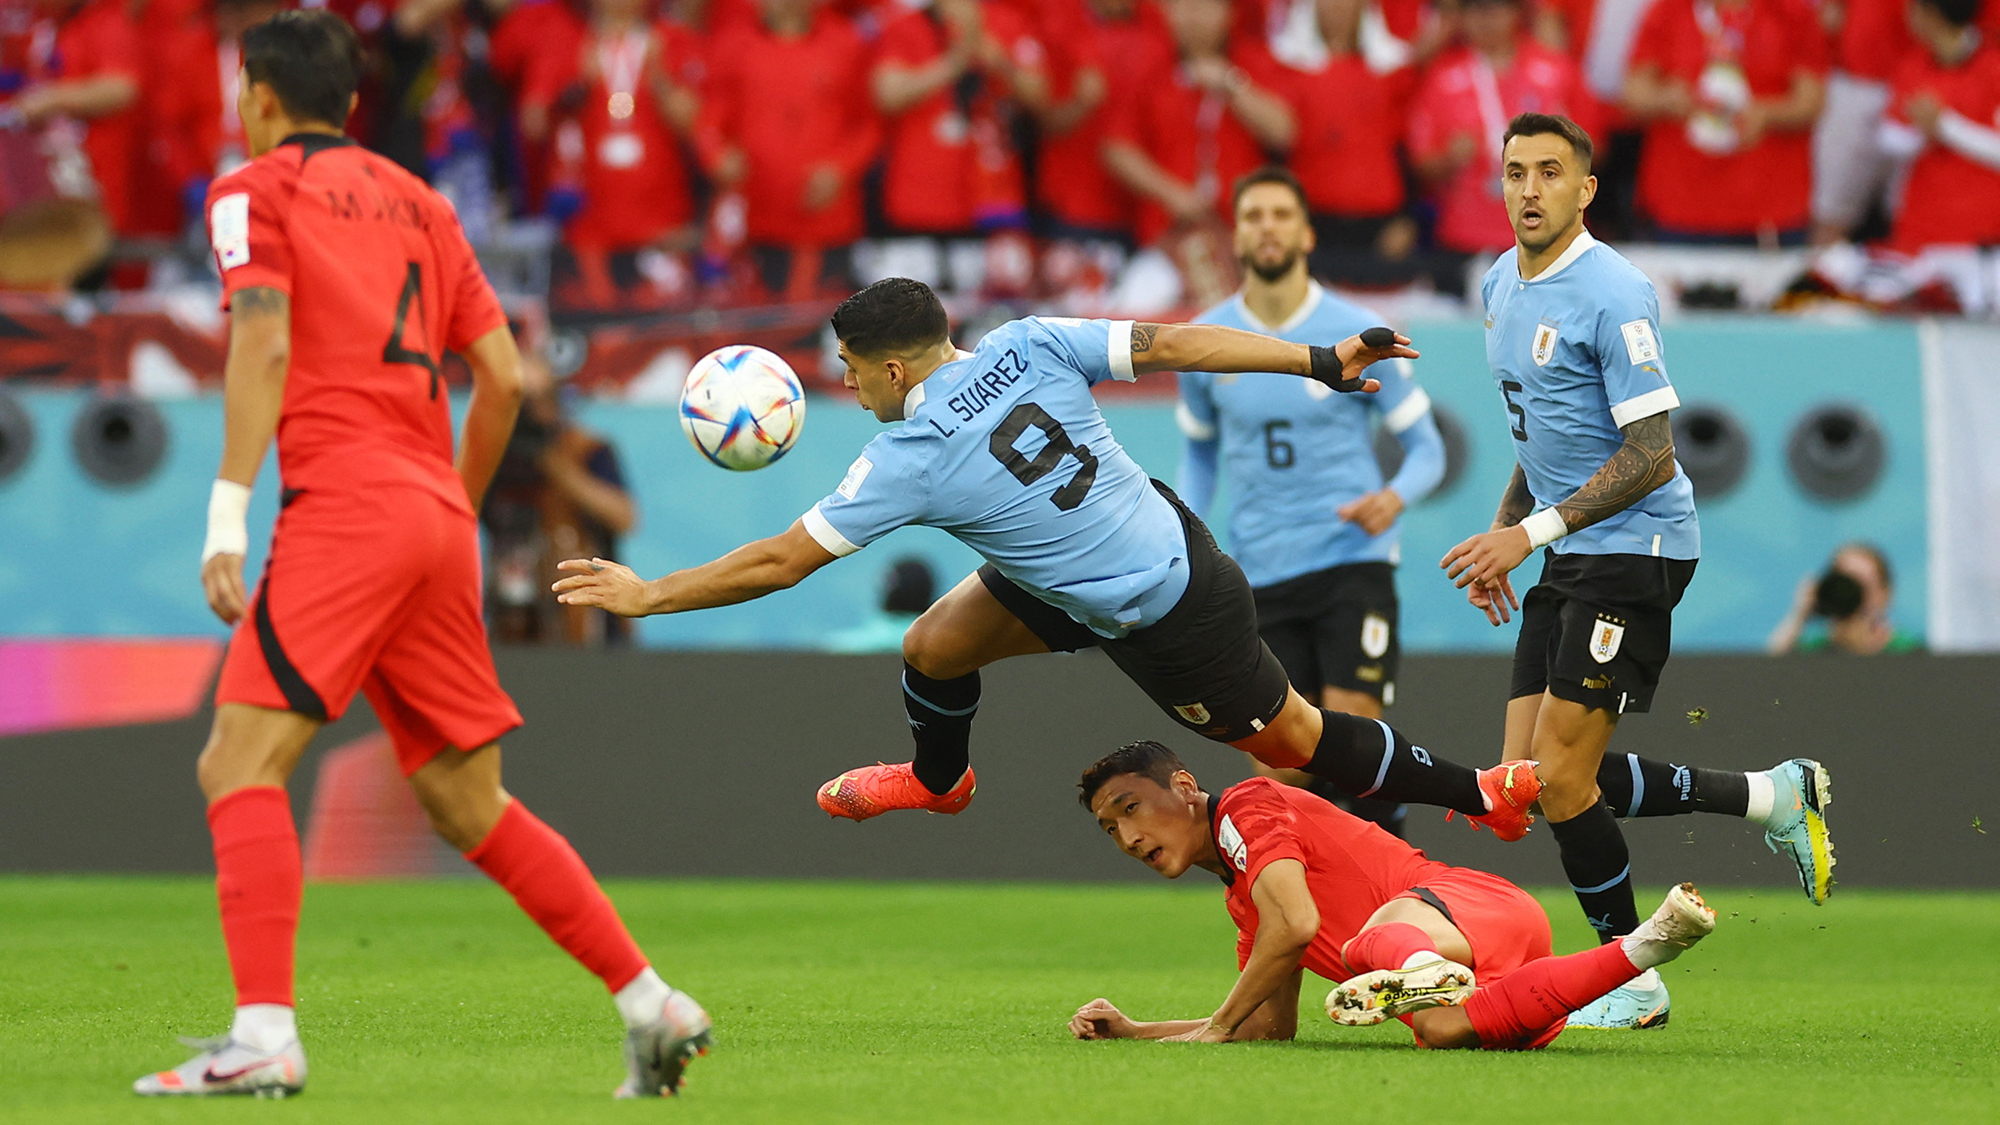 Exjugador uruguayo: la liga de fútbol de Rusia se ha vuelto fuerte